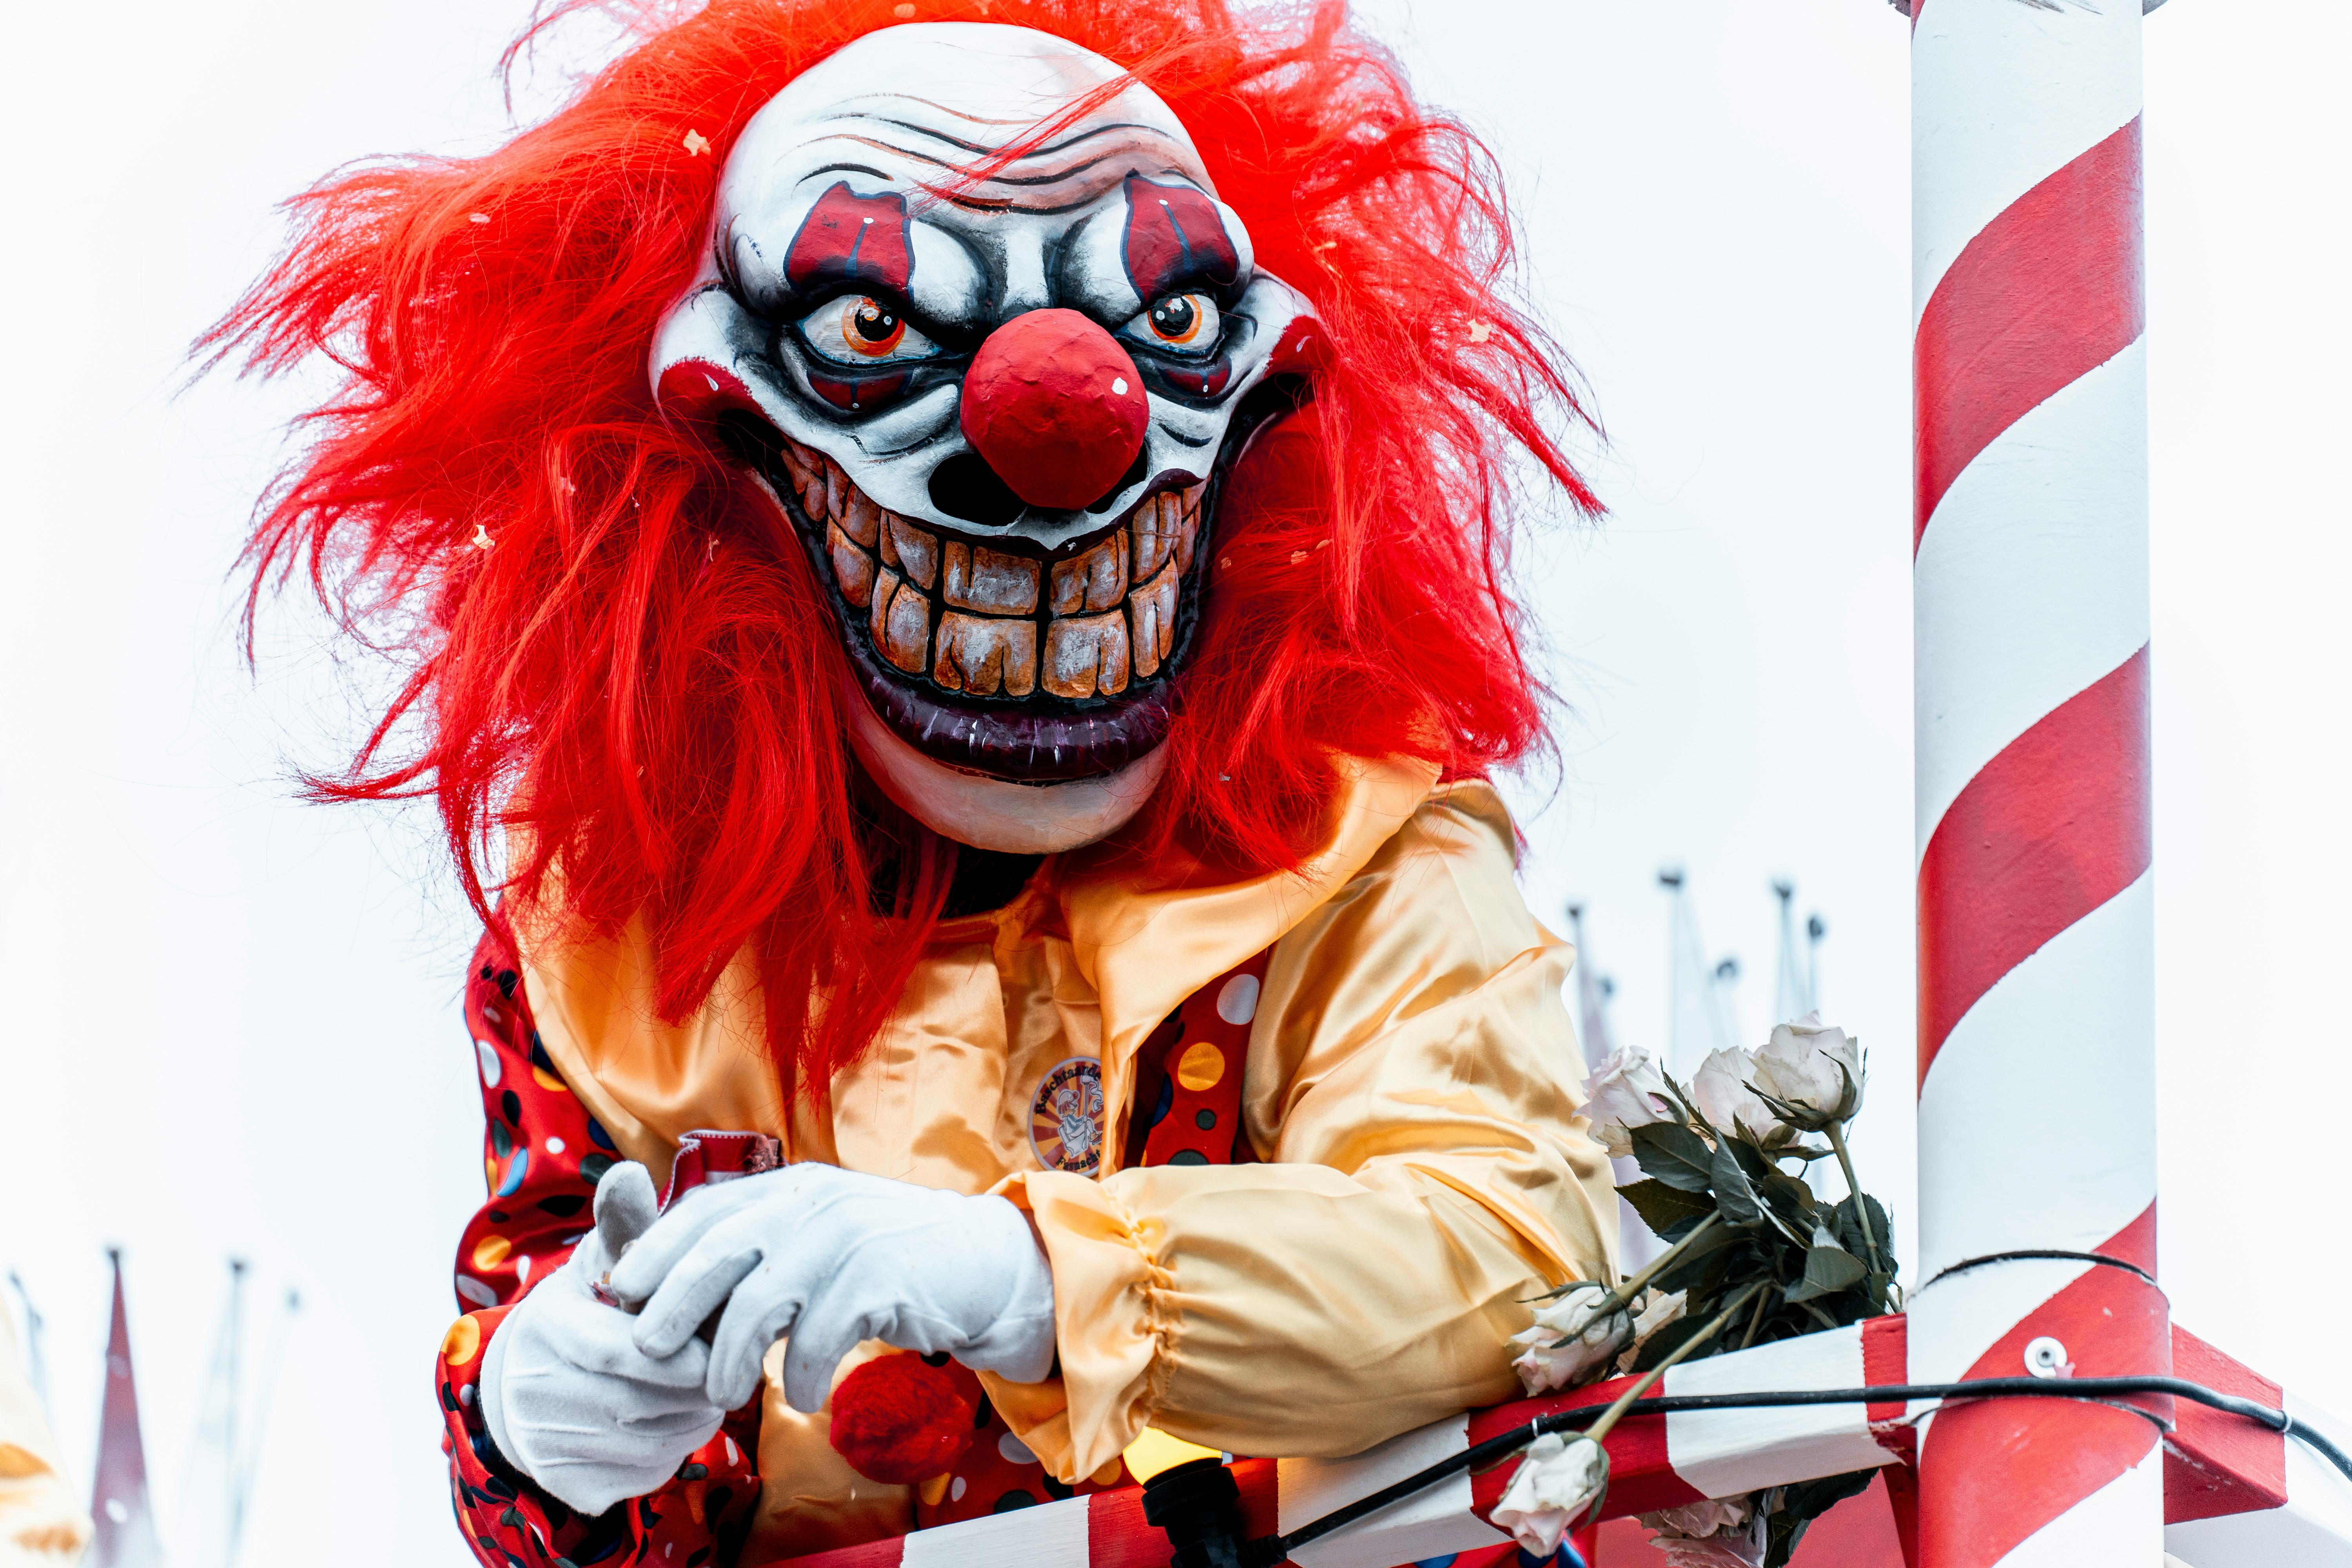 Scary Clown Costume · Free Stock Photo